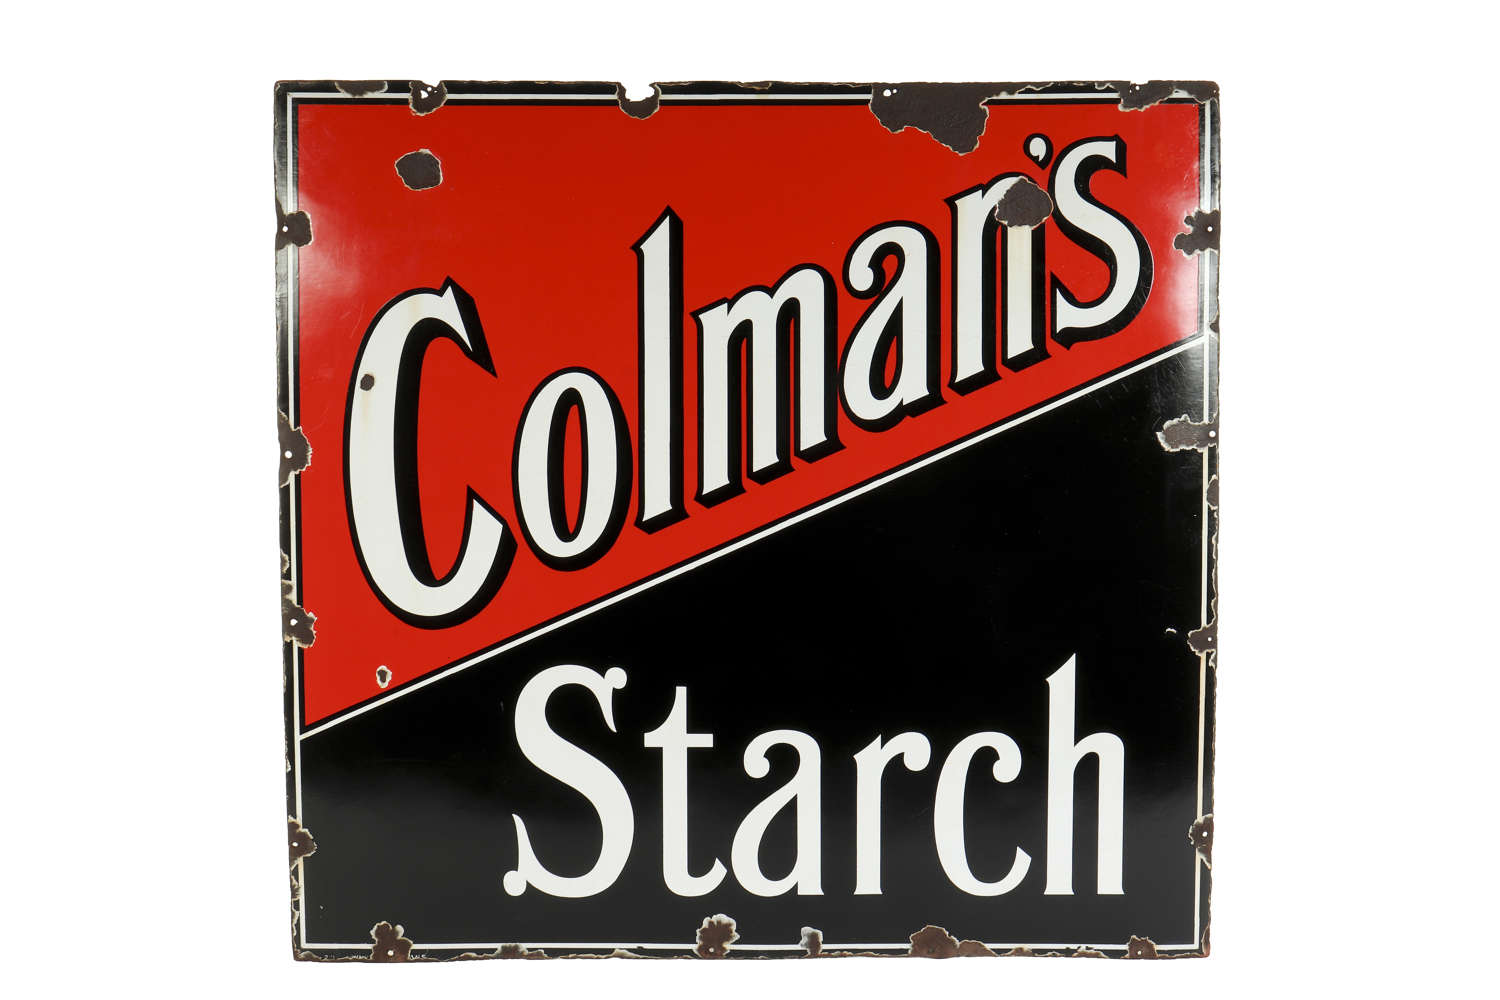 Original enamel advertising sign for Colman's Starch